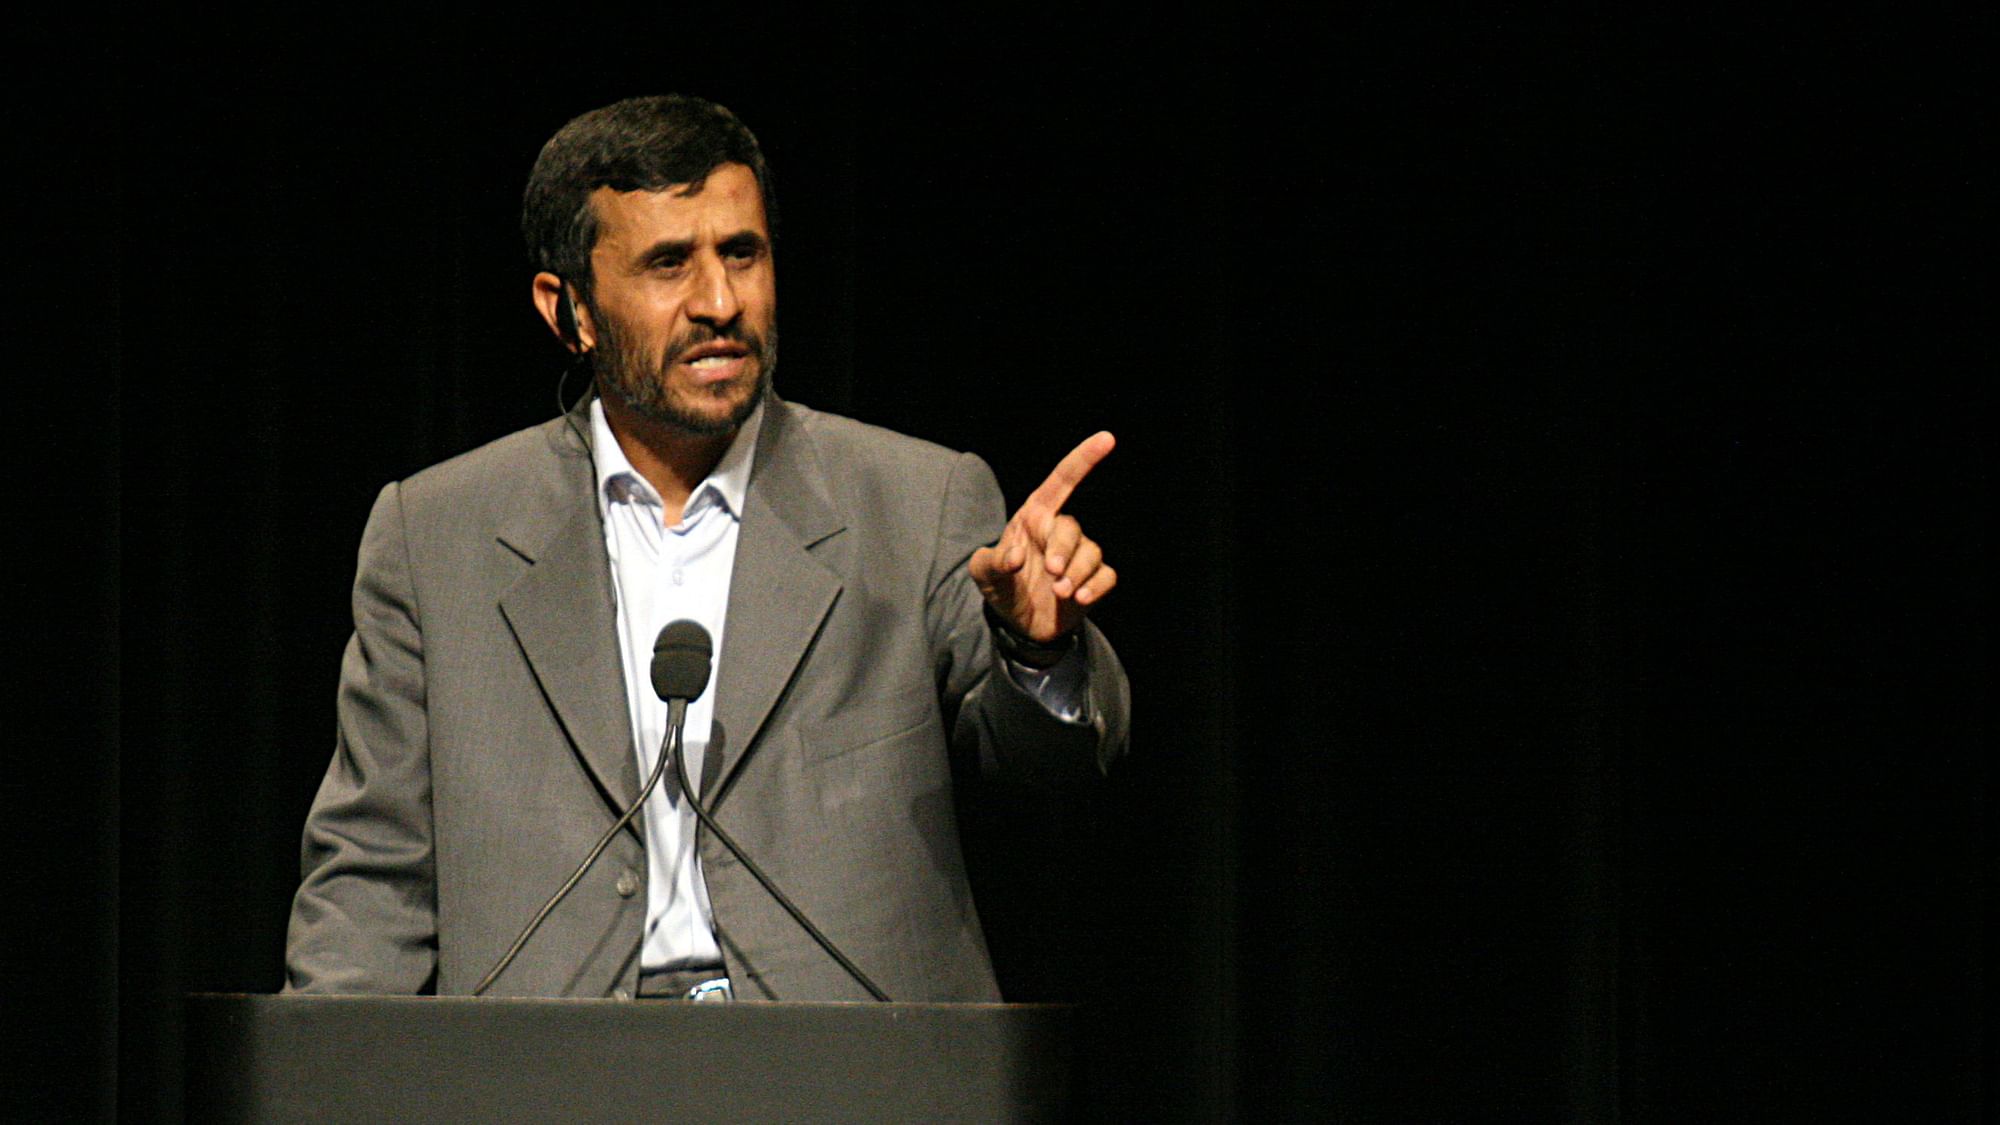 Mahmoud Ahmadinejad making a public speech at Columbia University in New York City in 2007.